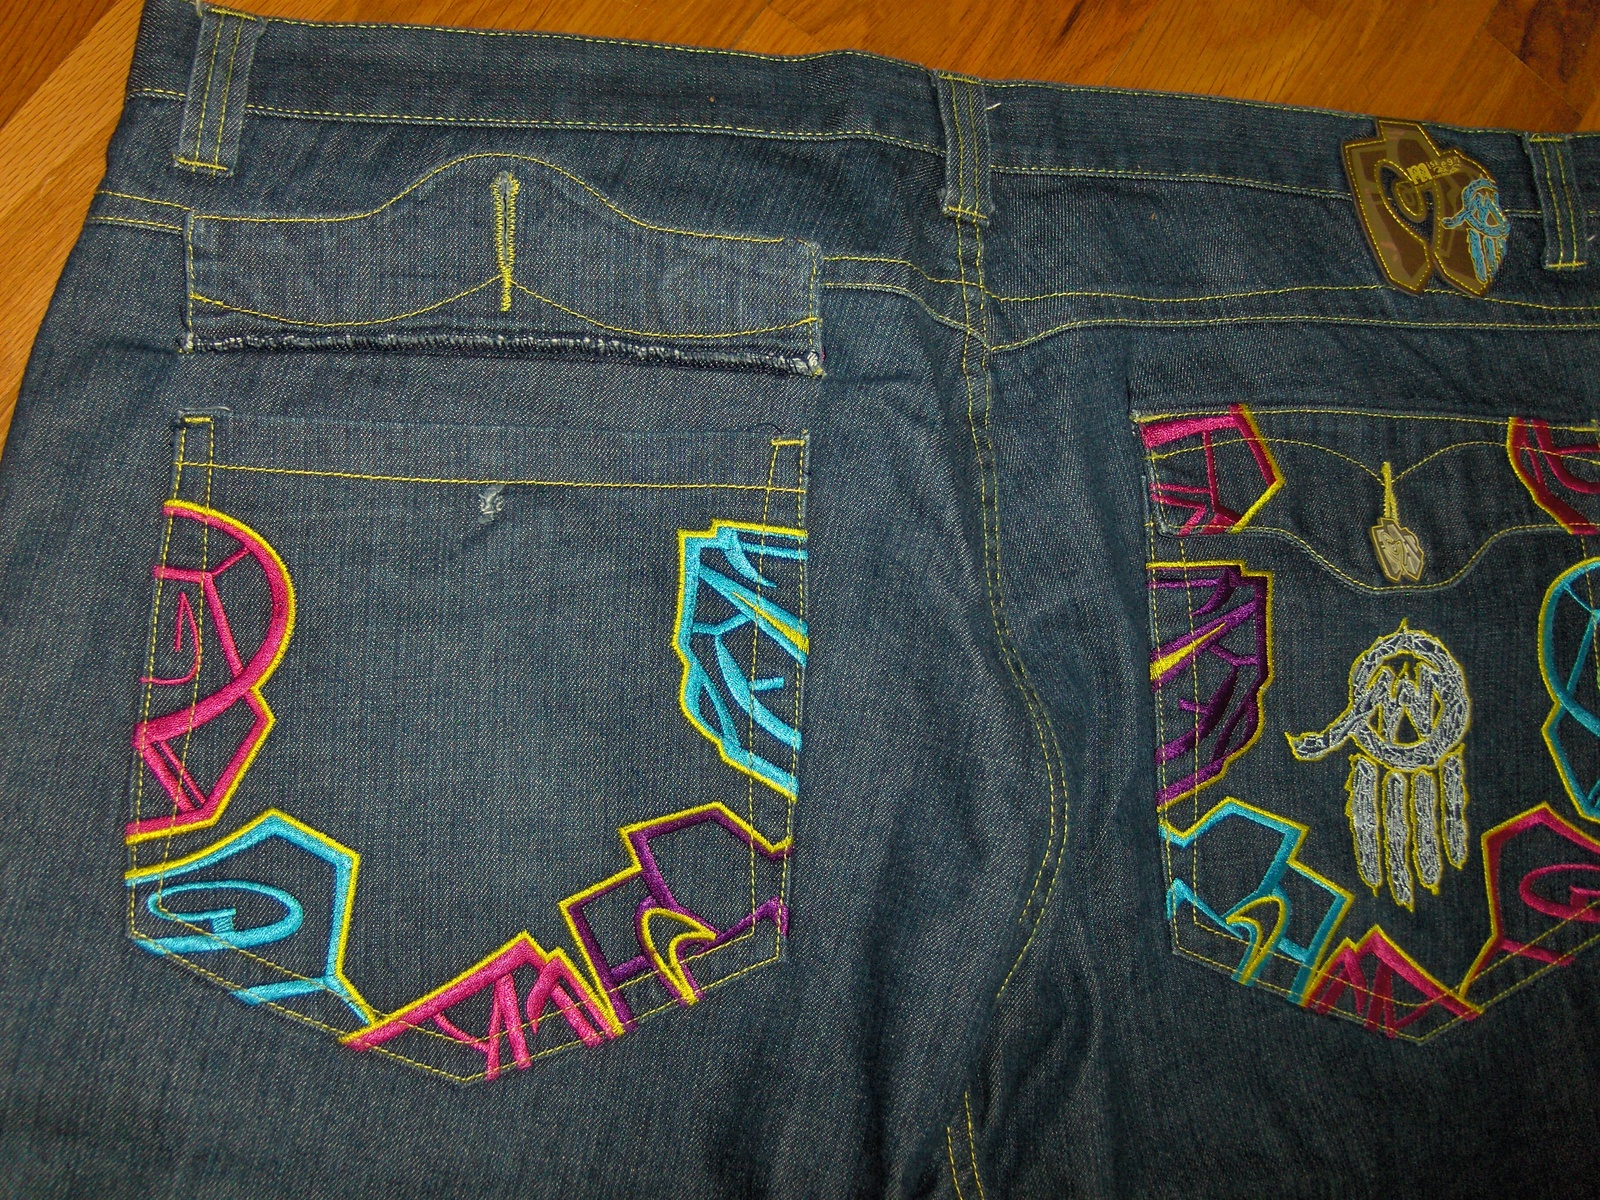 Miskeen Originals Jeans Shorts 44 Hip Hop Embroidered Europe Boarder ...